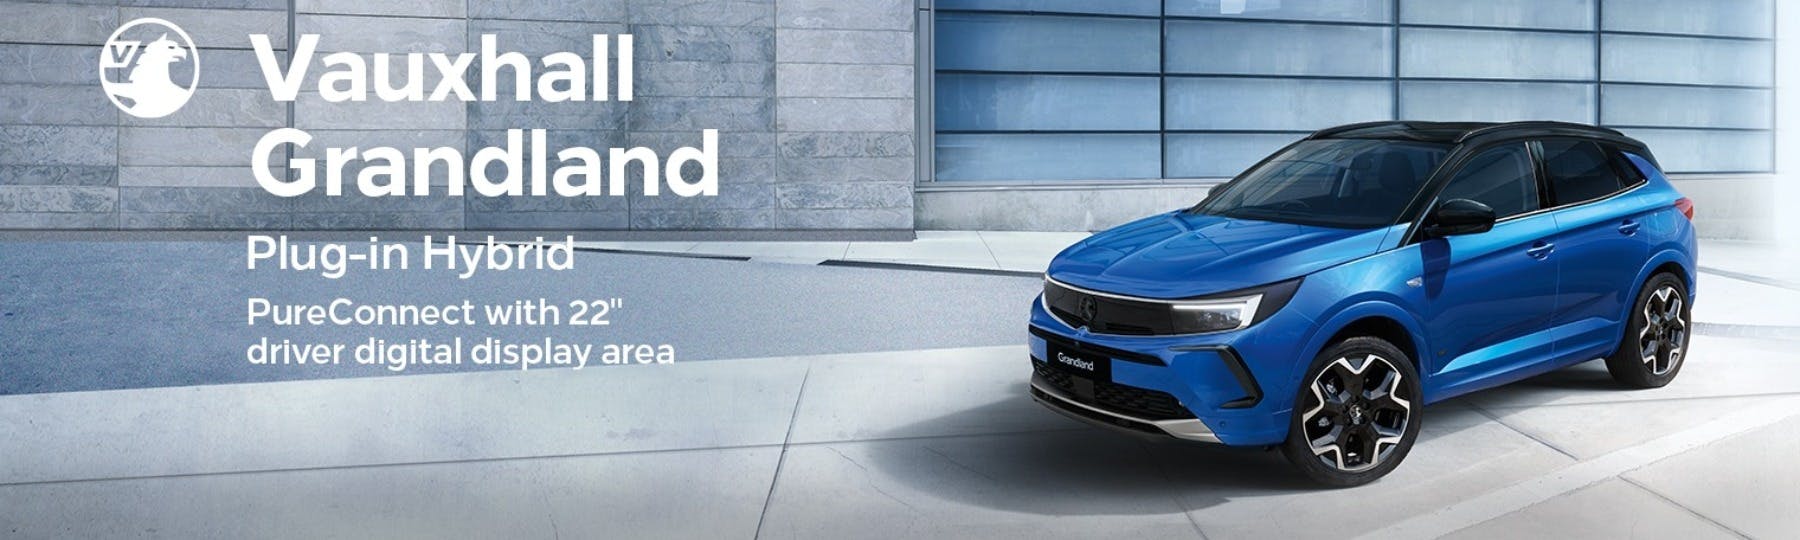 New Vauxhall Grandland Hybrid Leasing Offer